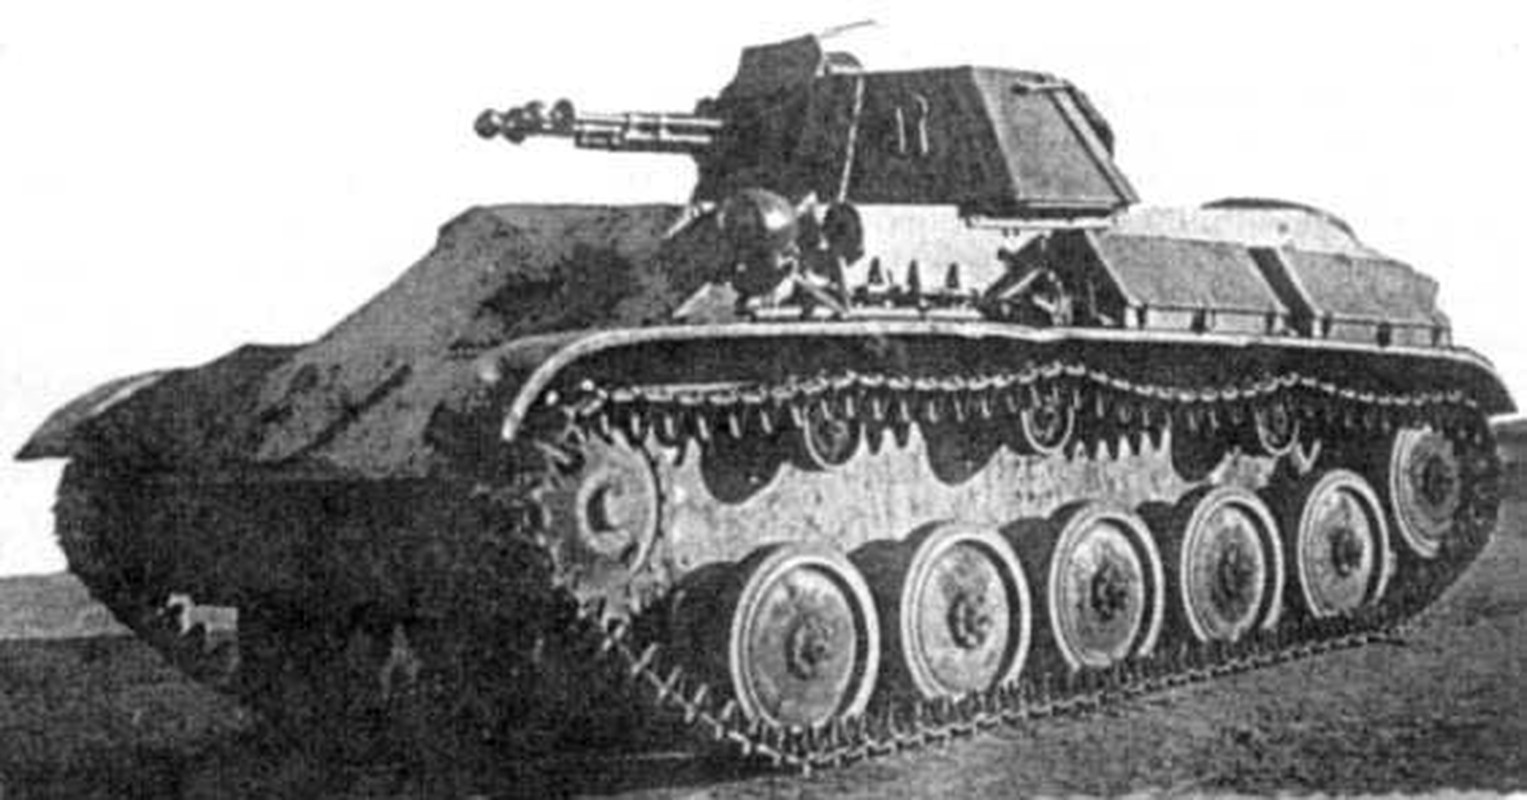 Xe tang T-80 cua nhung nam… 1940 co gi dac biet?-Hinh-7